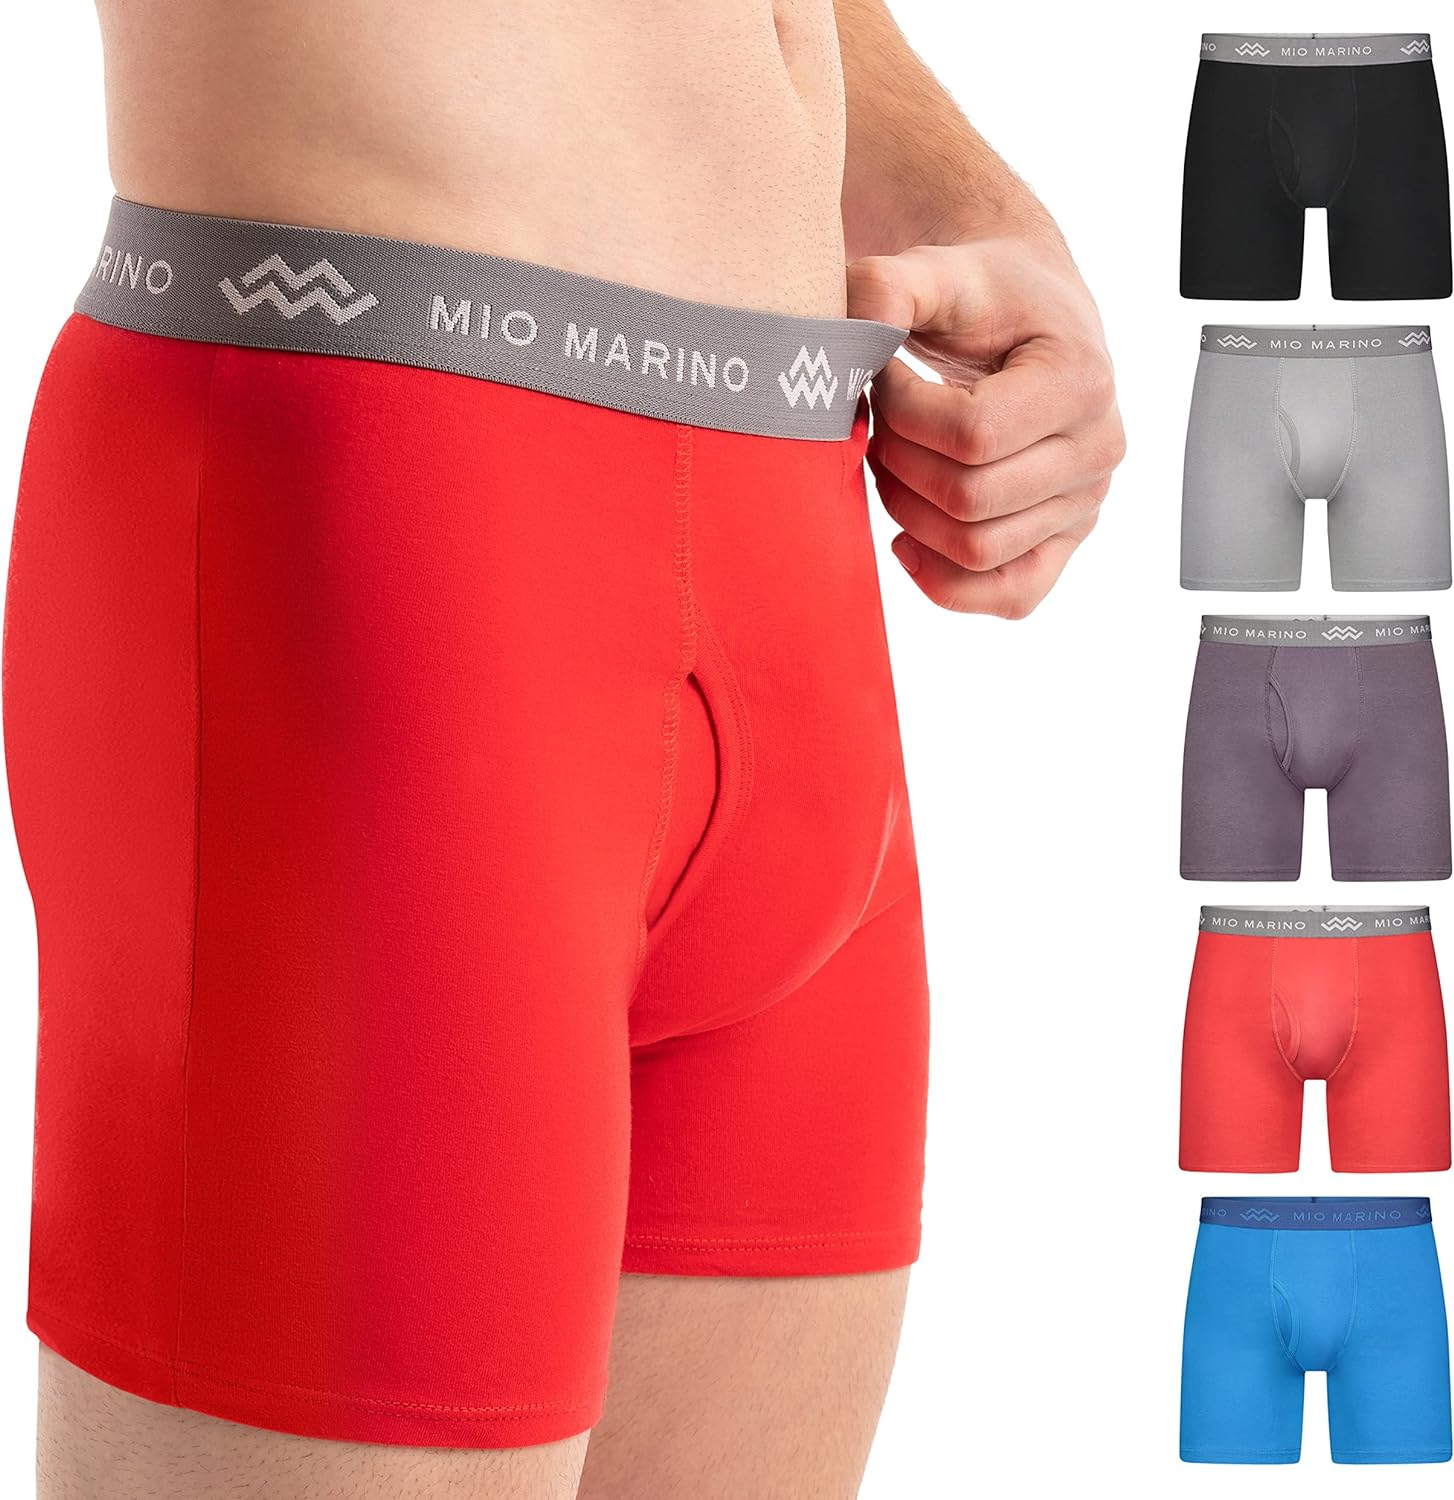 Premium Cotton Mio Marino Bold Colors Mens underwear boxer briefs Skin Fit 5-Pack Moisture Wicking for Comfort 